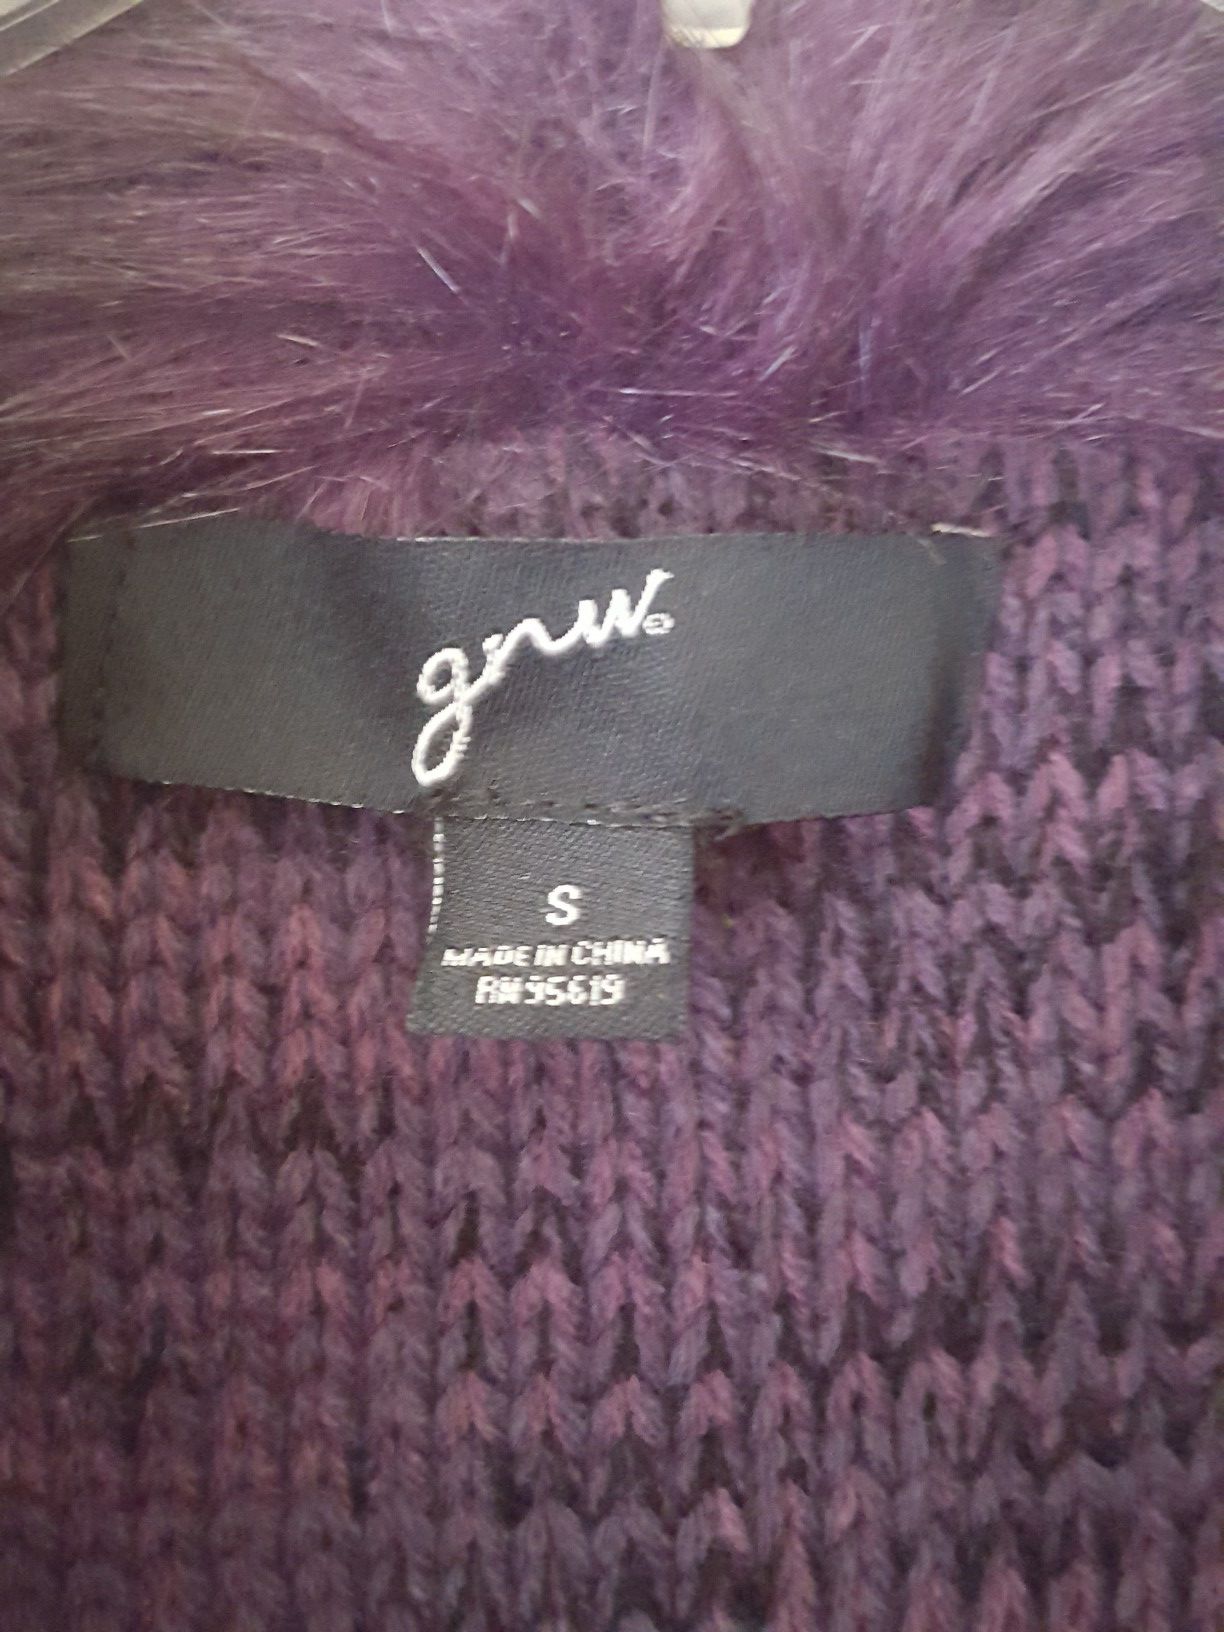 Gnw purple sleeveless cardigan small size